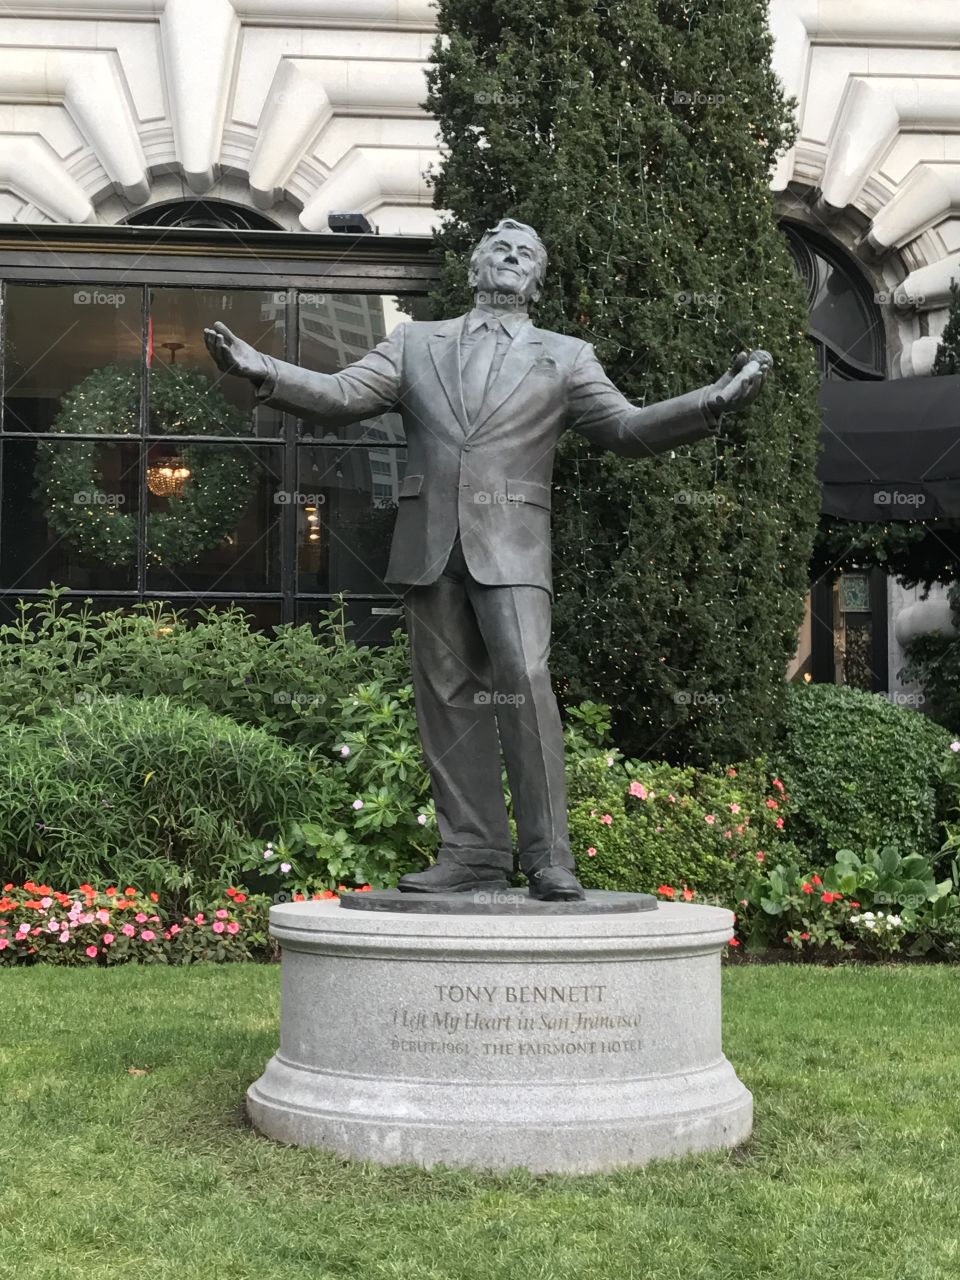 Tony Bennett Statue at the Fairmont Hotel  in San Francisco, CA - "I left my heart in San Francisco" 💕